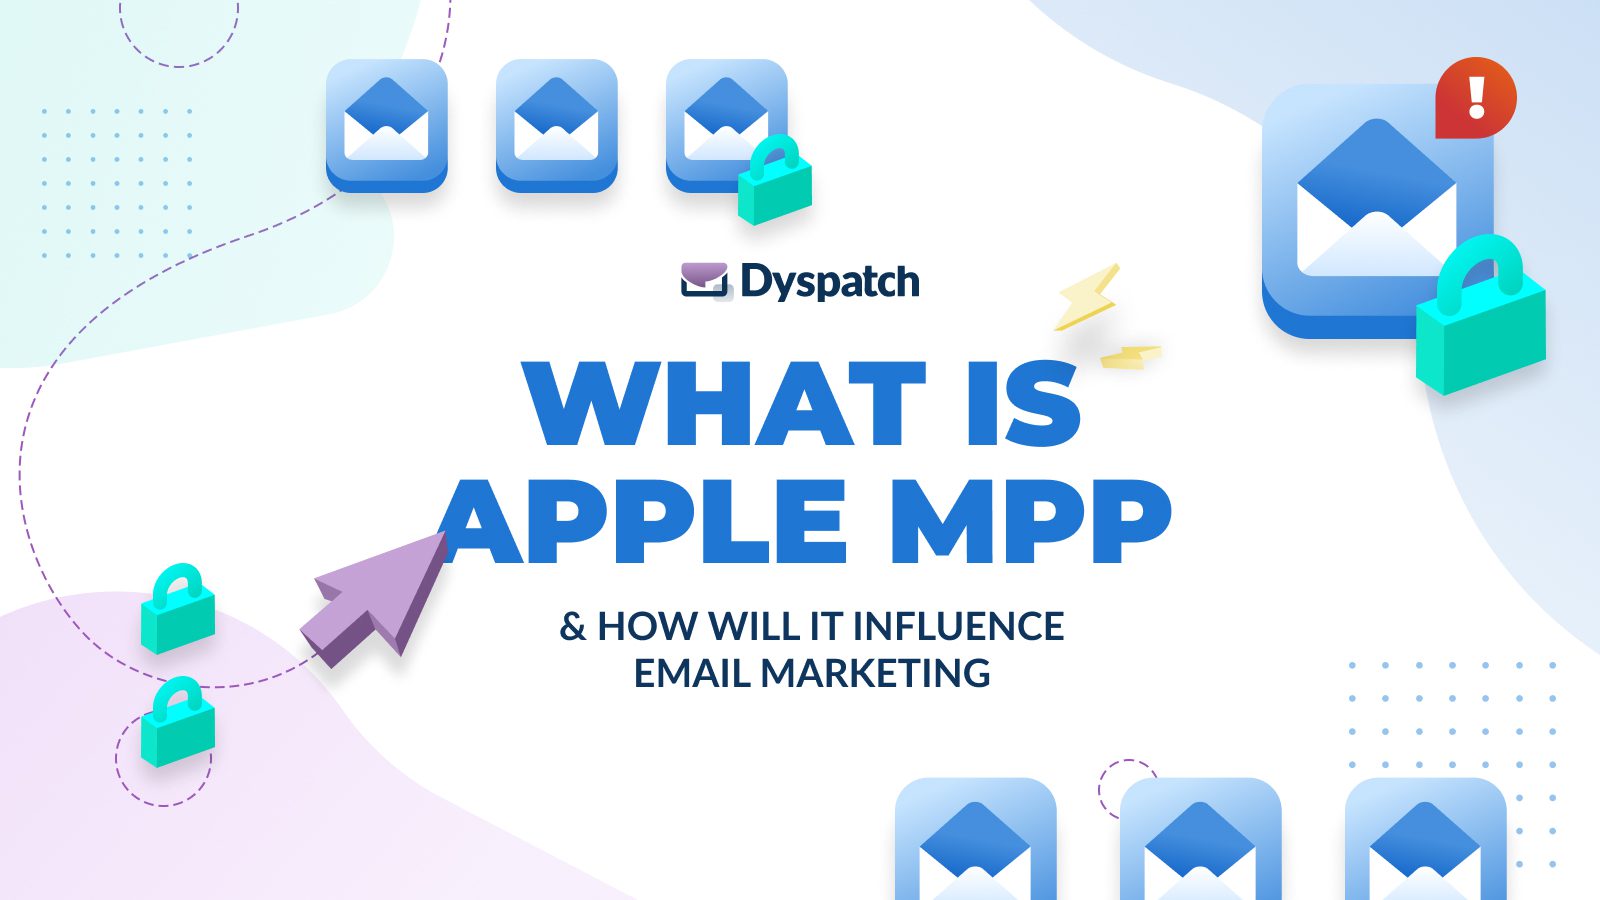 What is Apple MPP?